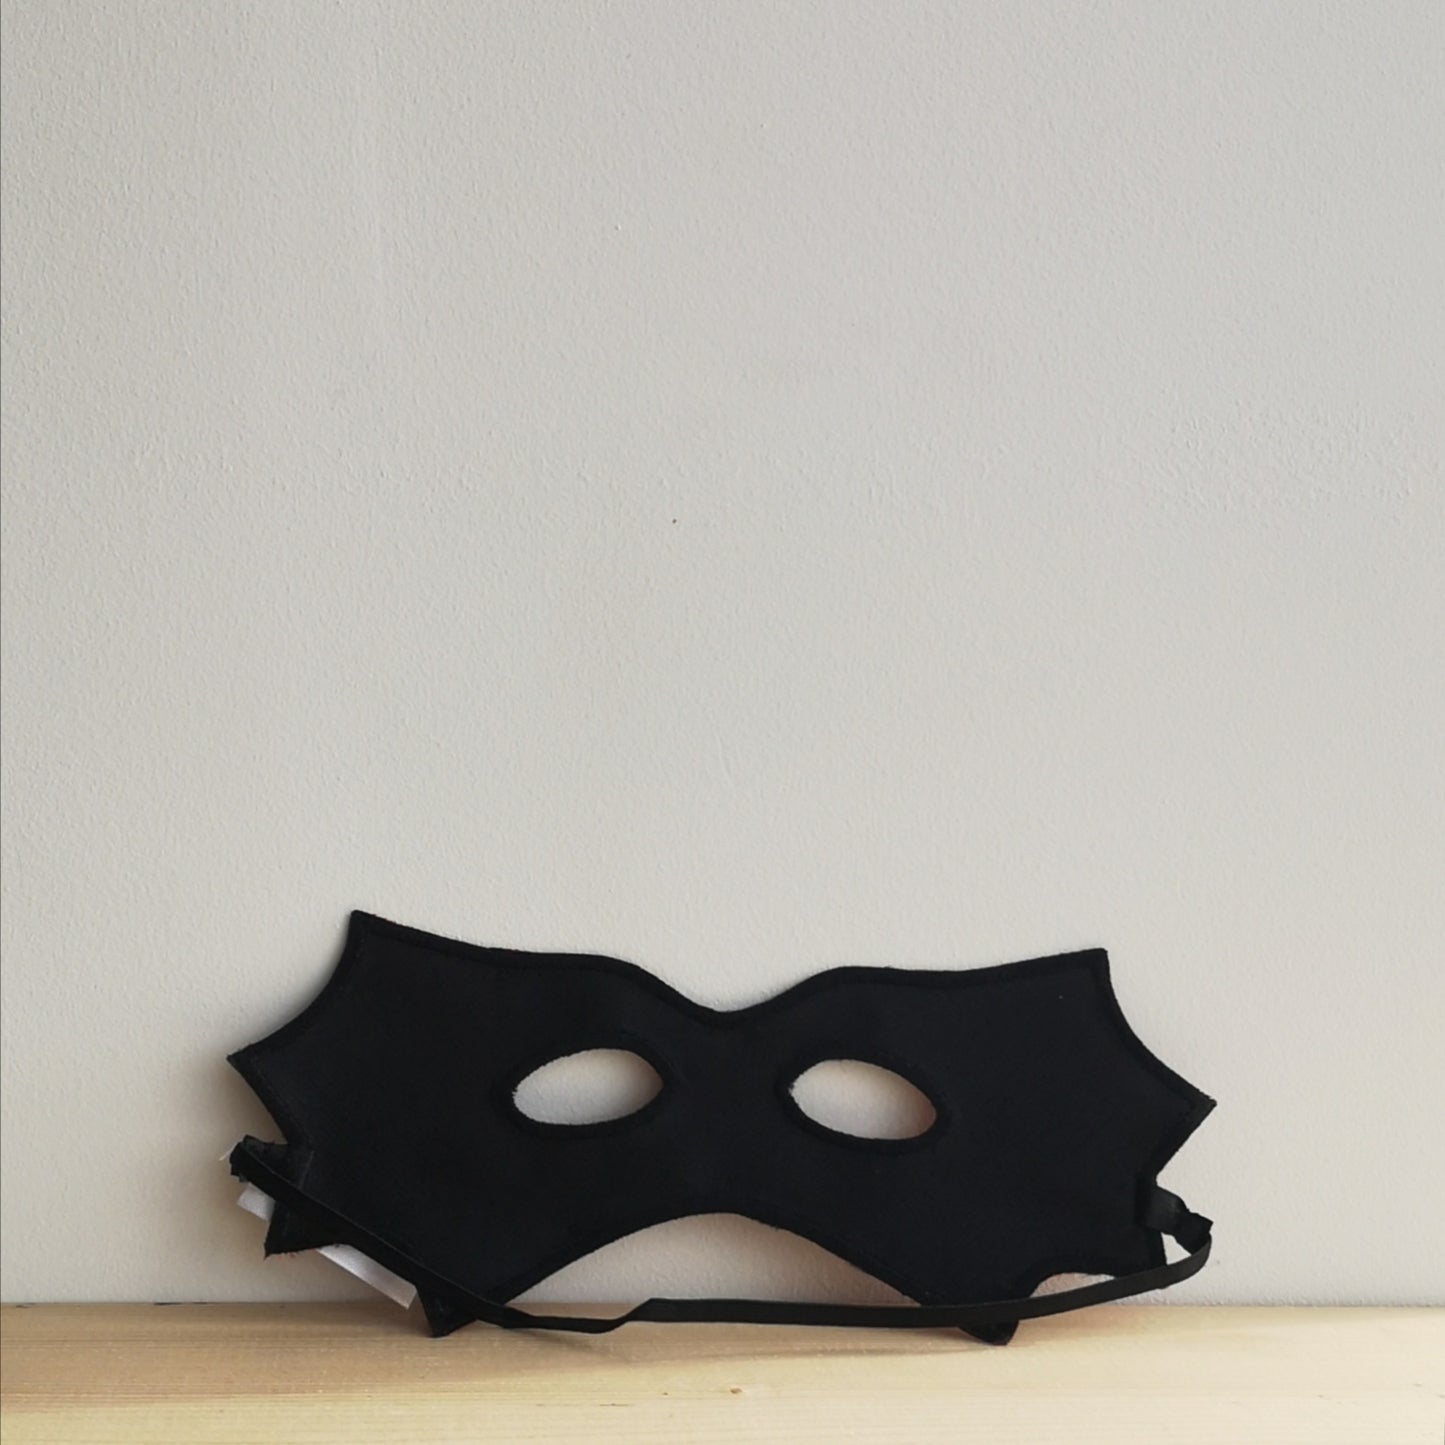 Super mask